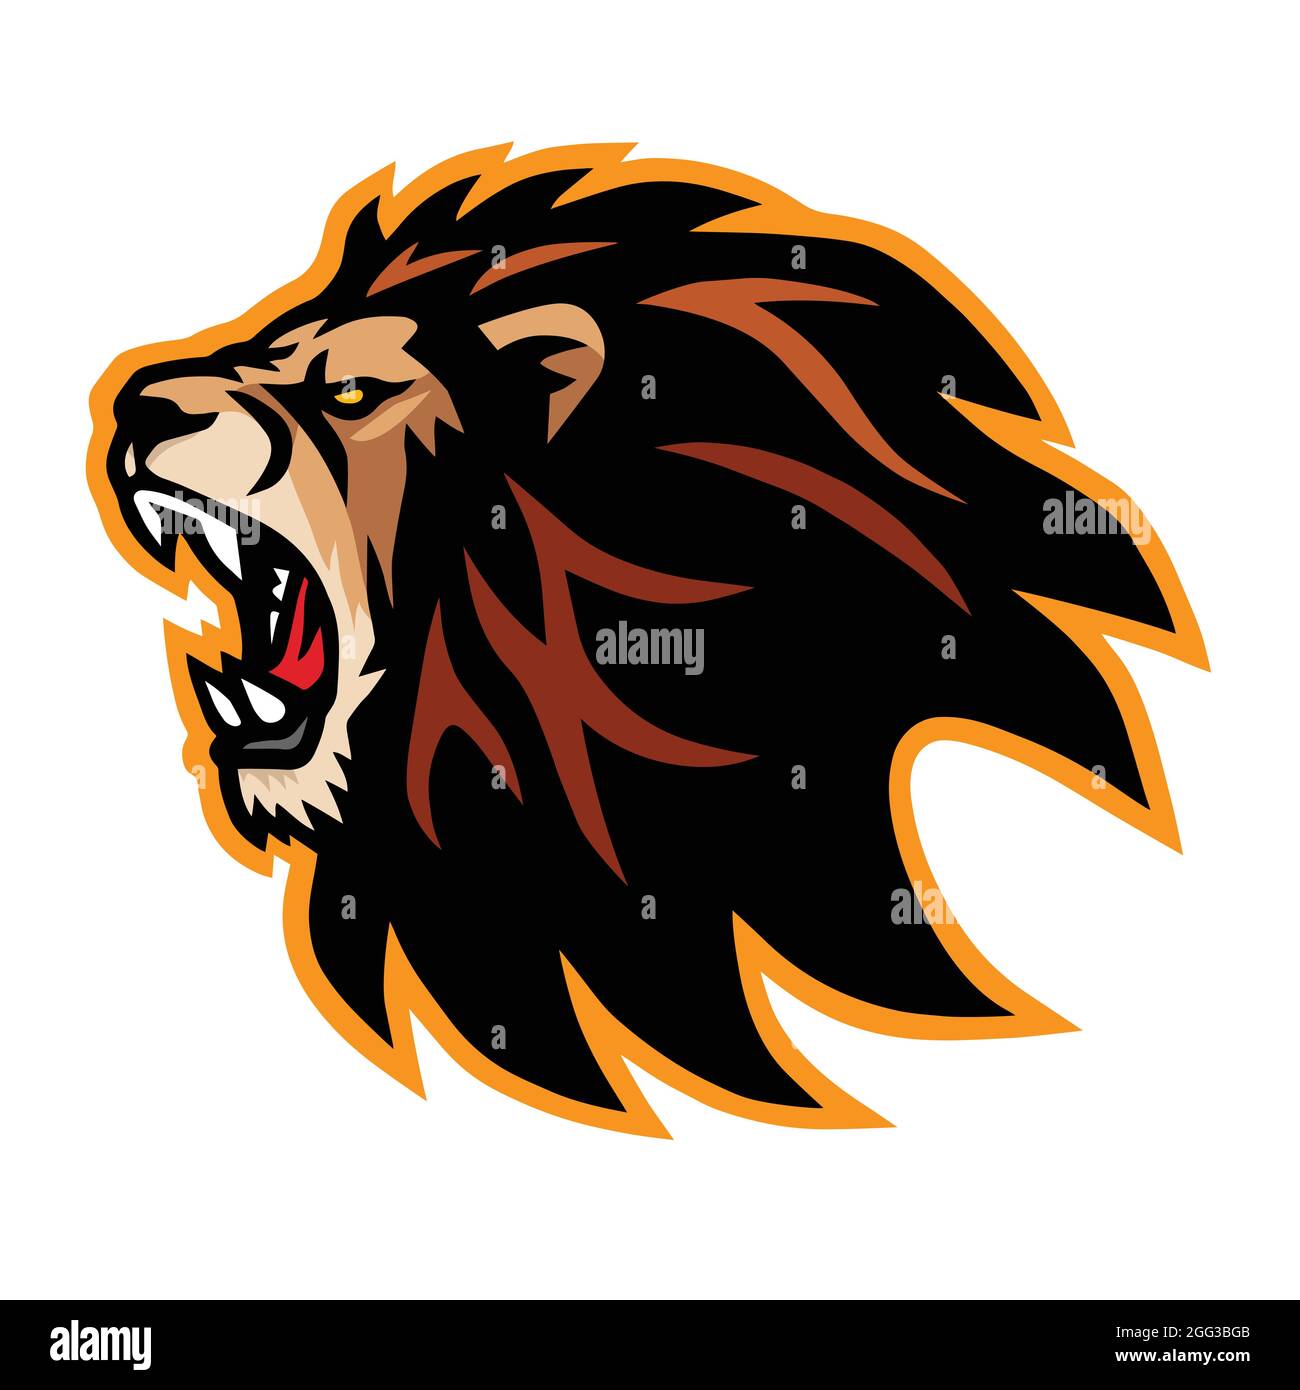 Lion head gaming logo Royalty Free Vector Image